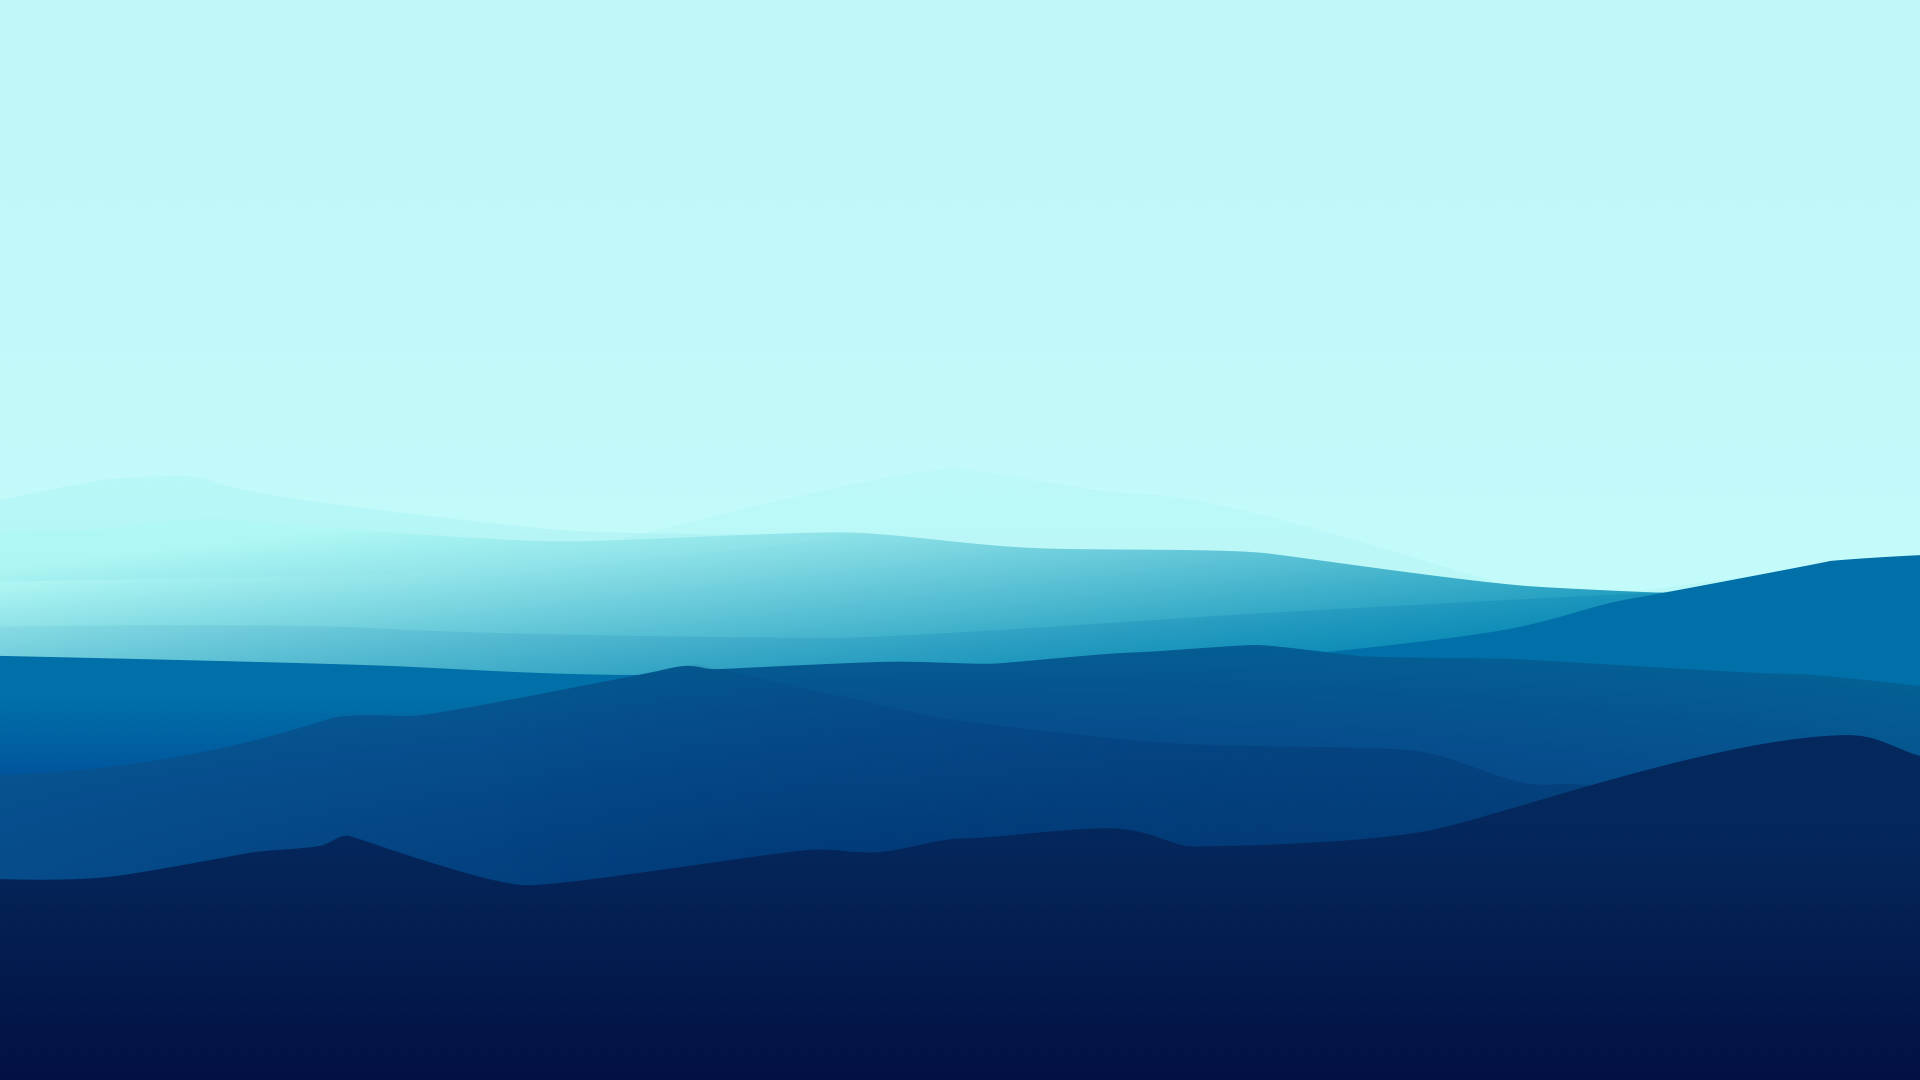 Aesthetic Minimalist Blue Mountains Background